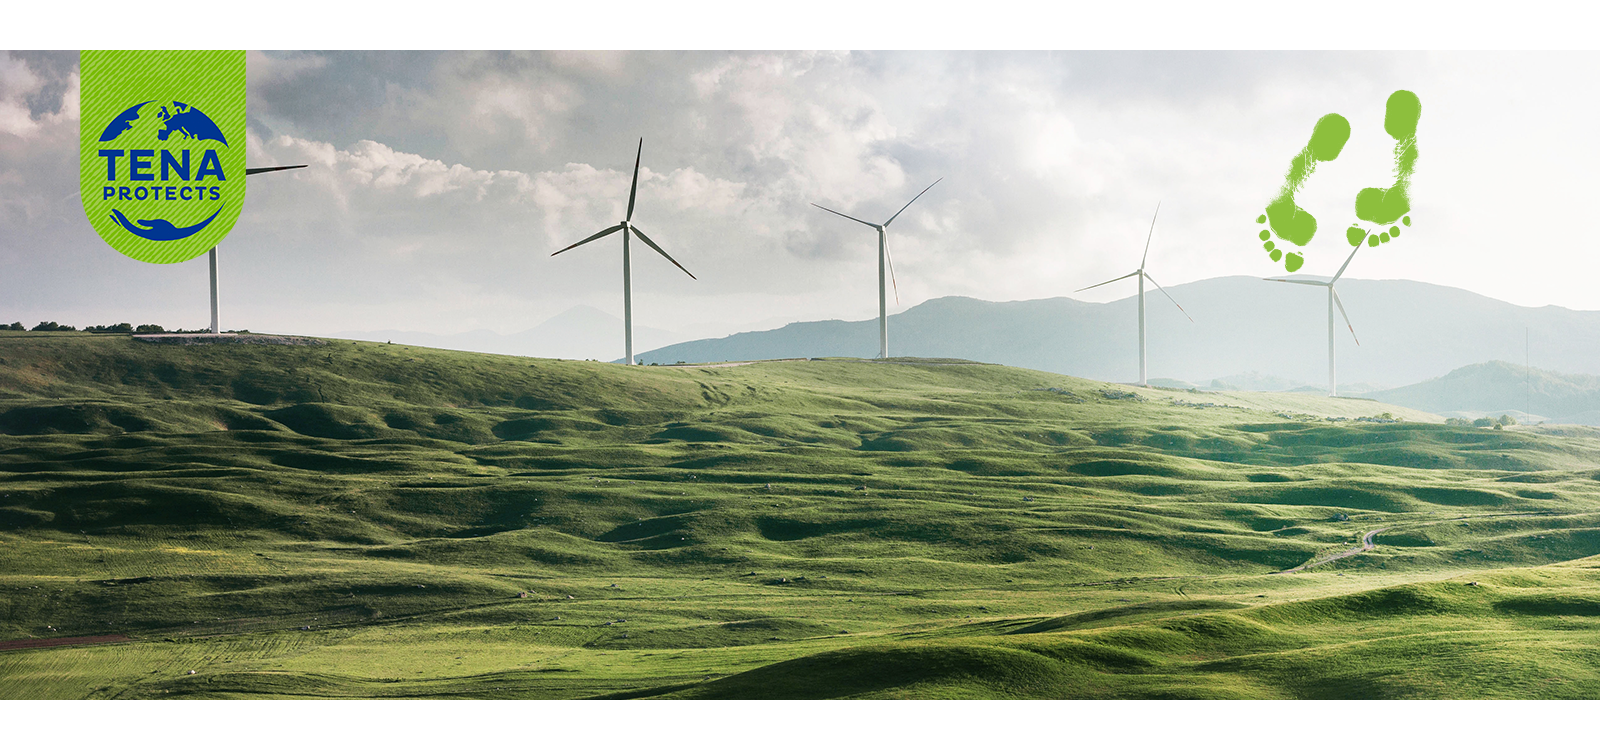 cosanum_tena-sustainability-windcraft-green-field.png (1.9 MB)